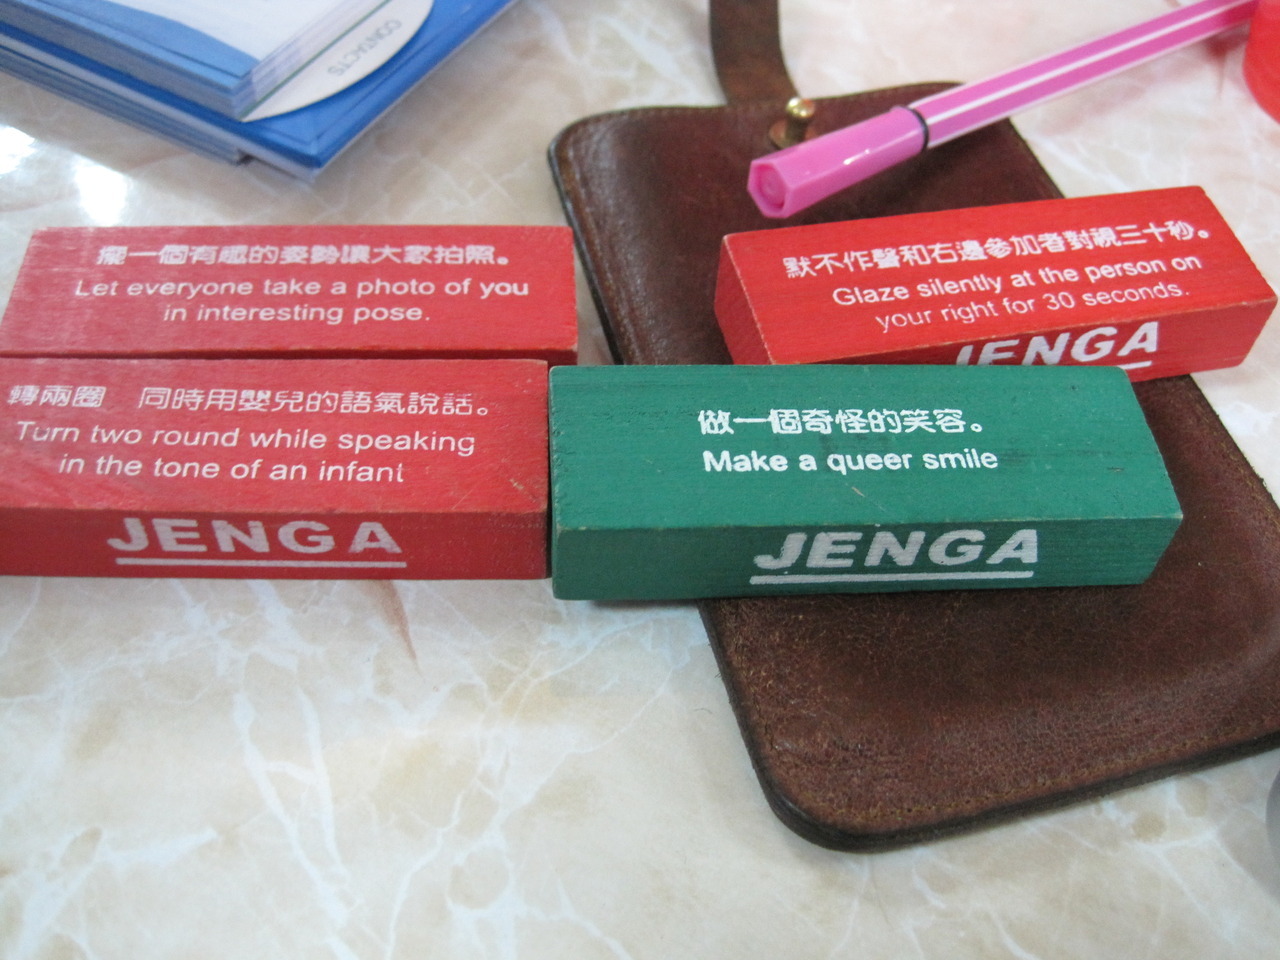 jenga meaning in korean